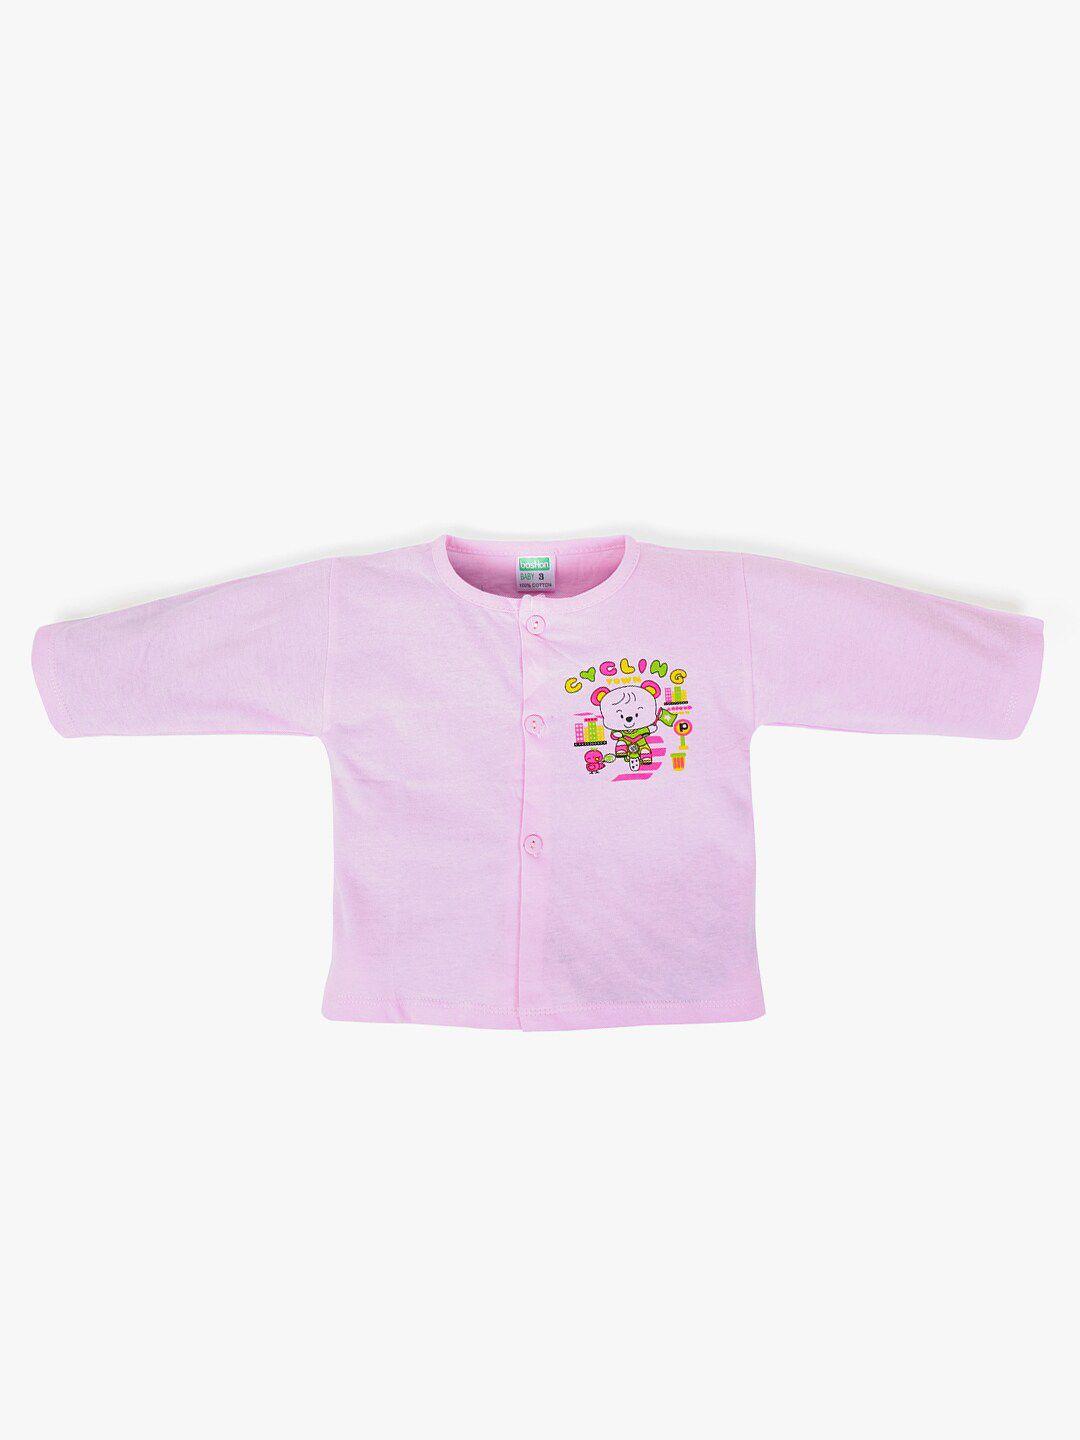 pokory unisex kids pink henley neck t-shirt